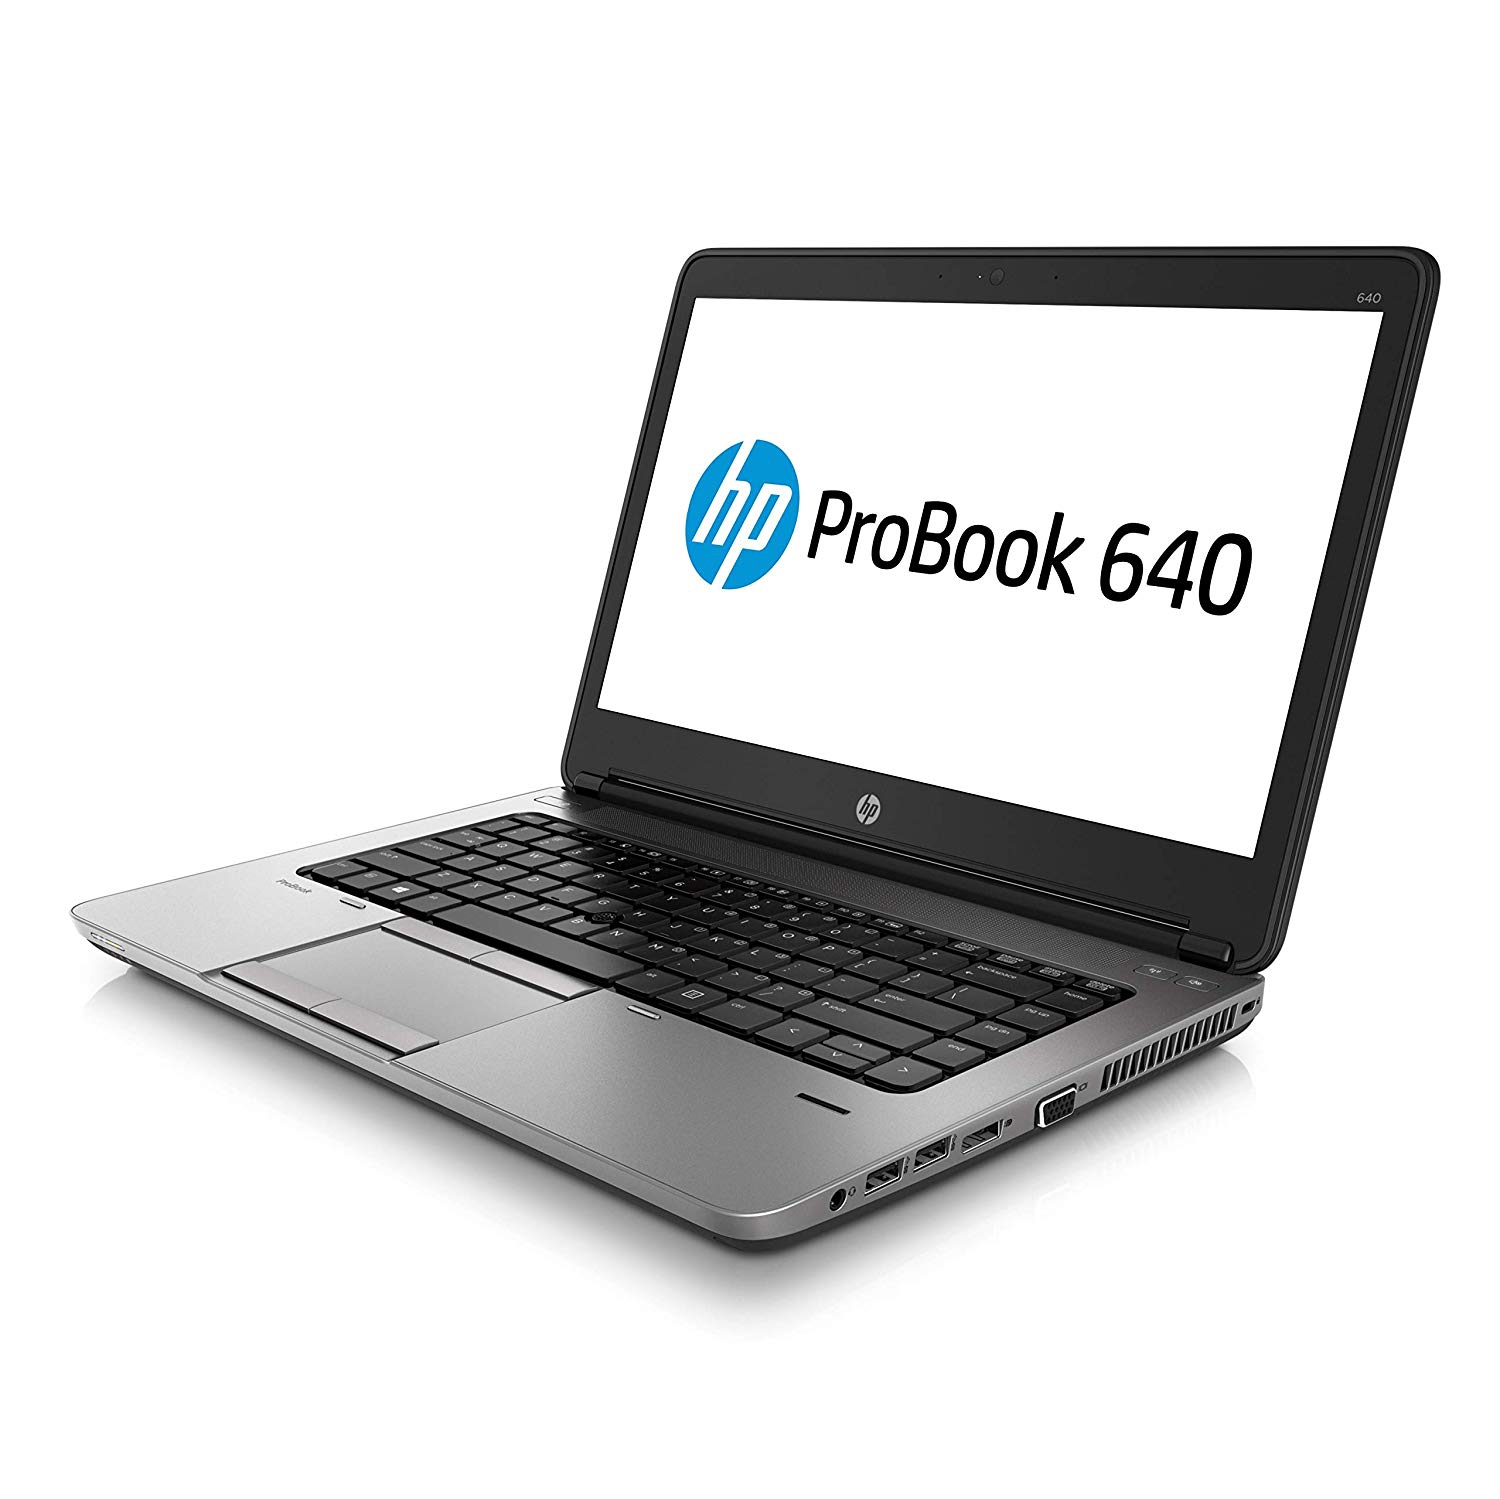 Refurbished (Good) - HP ProBook 640 G1 Laptop: Intel Core i5 - 4340M 2.90GHz, 8GB RAM, 500GB HDD, 14"Â, DVDRW, Win 11 Home, NO Webcam